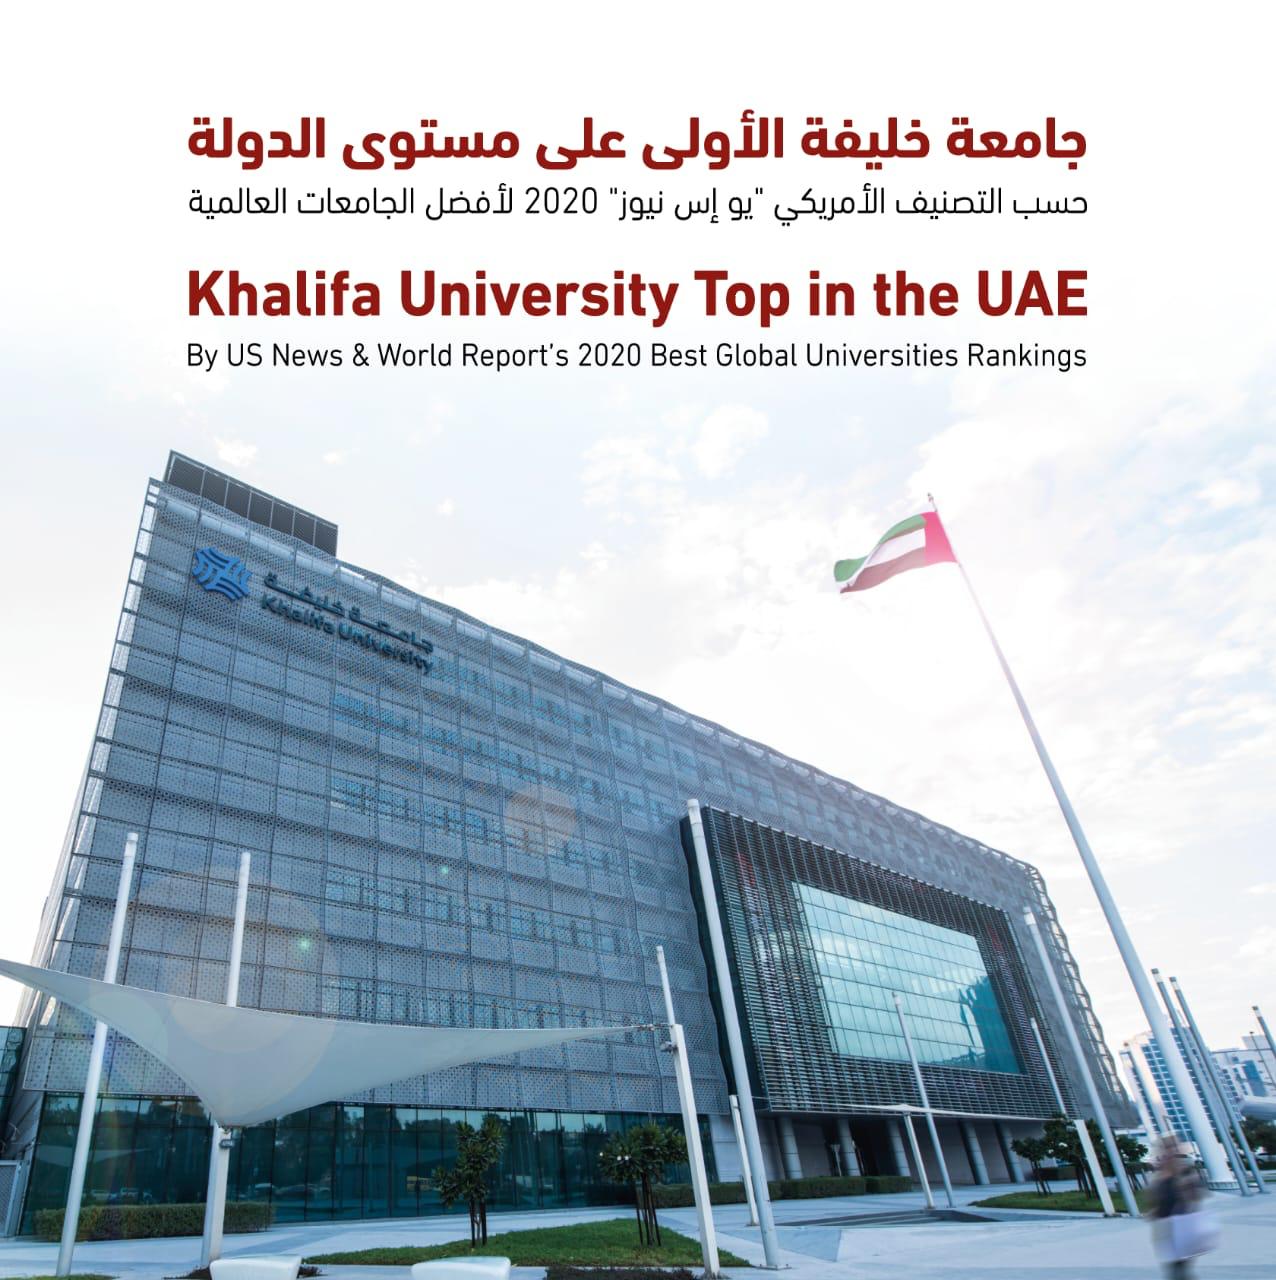 Khalifa University Ranked Top in UAE by US News & World Report’s 2020 Best Global Universities Rankings